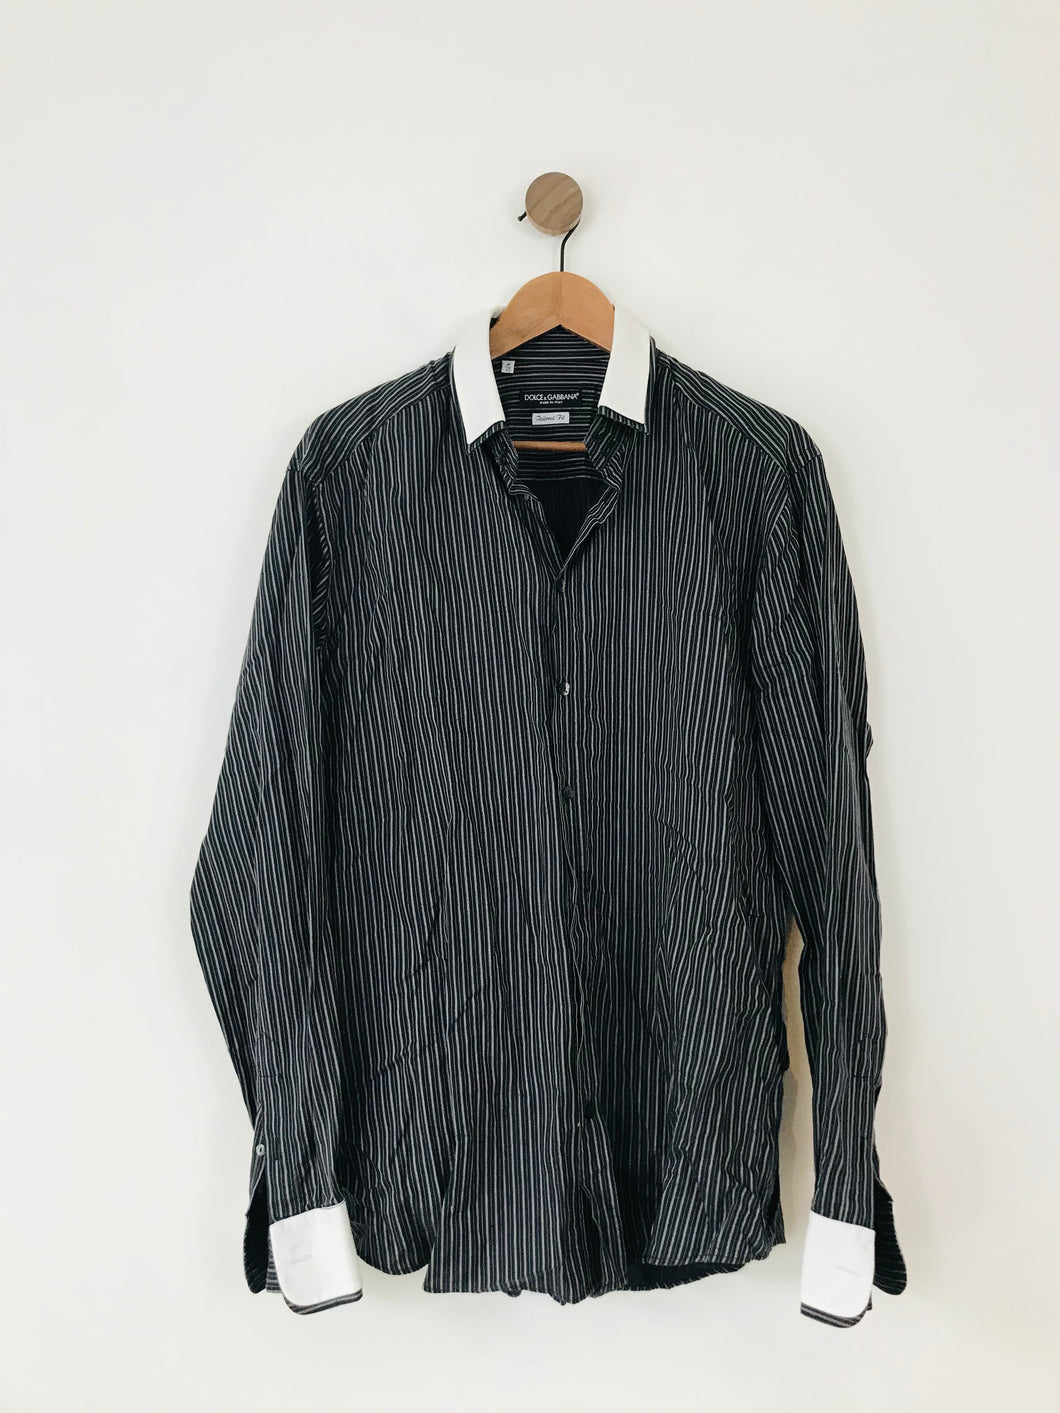 Dolce & Gabbana Men’s Tailored Fit Pinstripe Shirt | 43 | Black